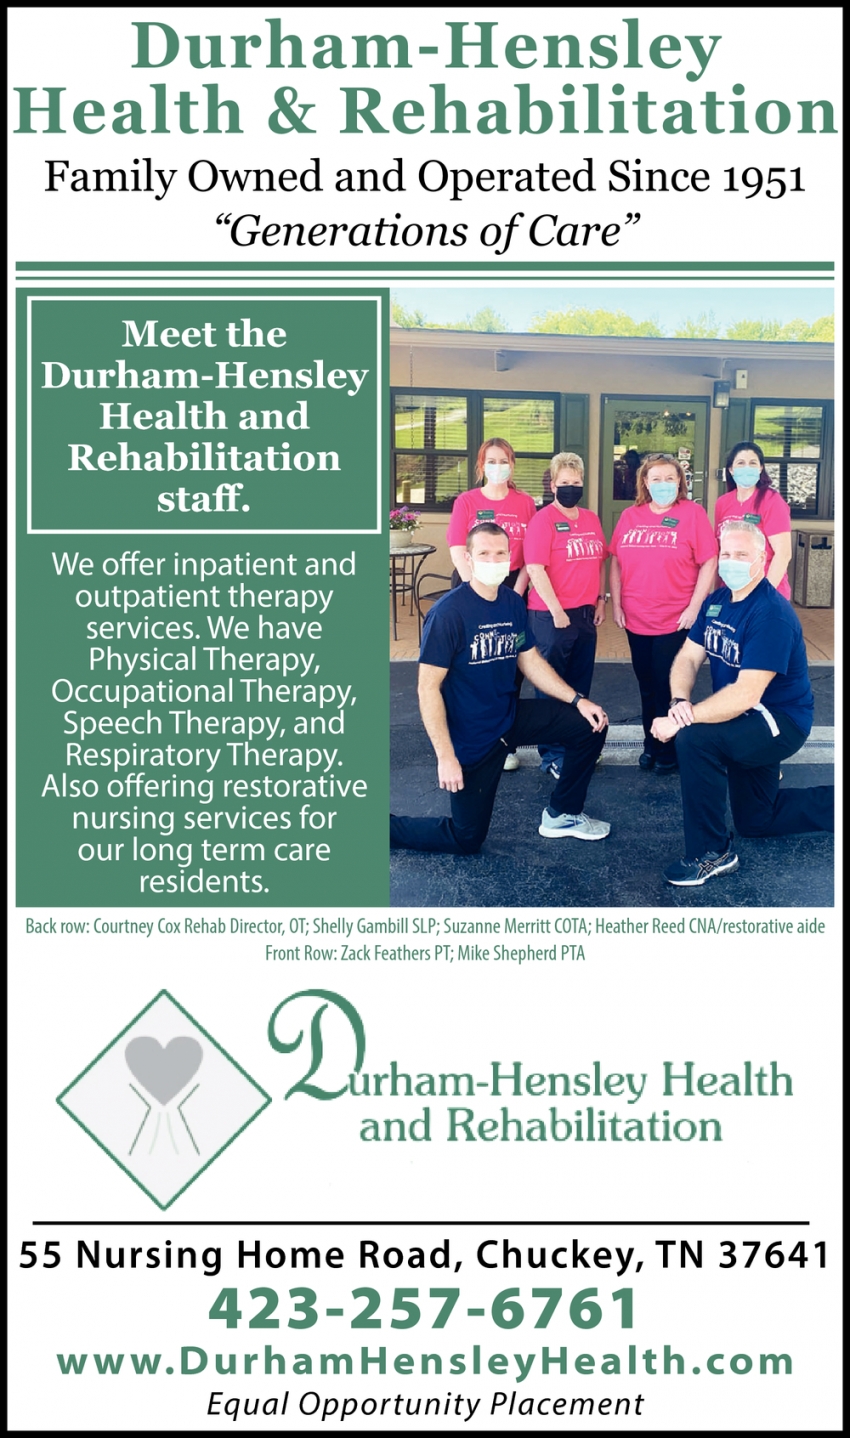 Durham-Hensley Health & Rehabilitation